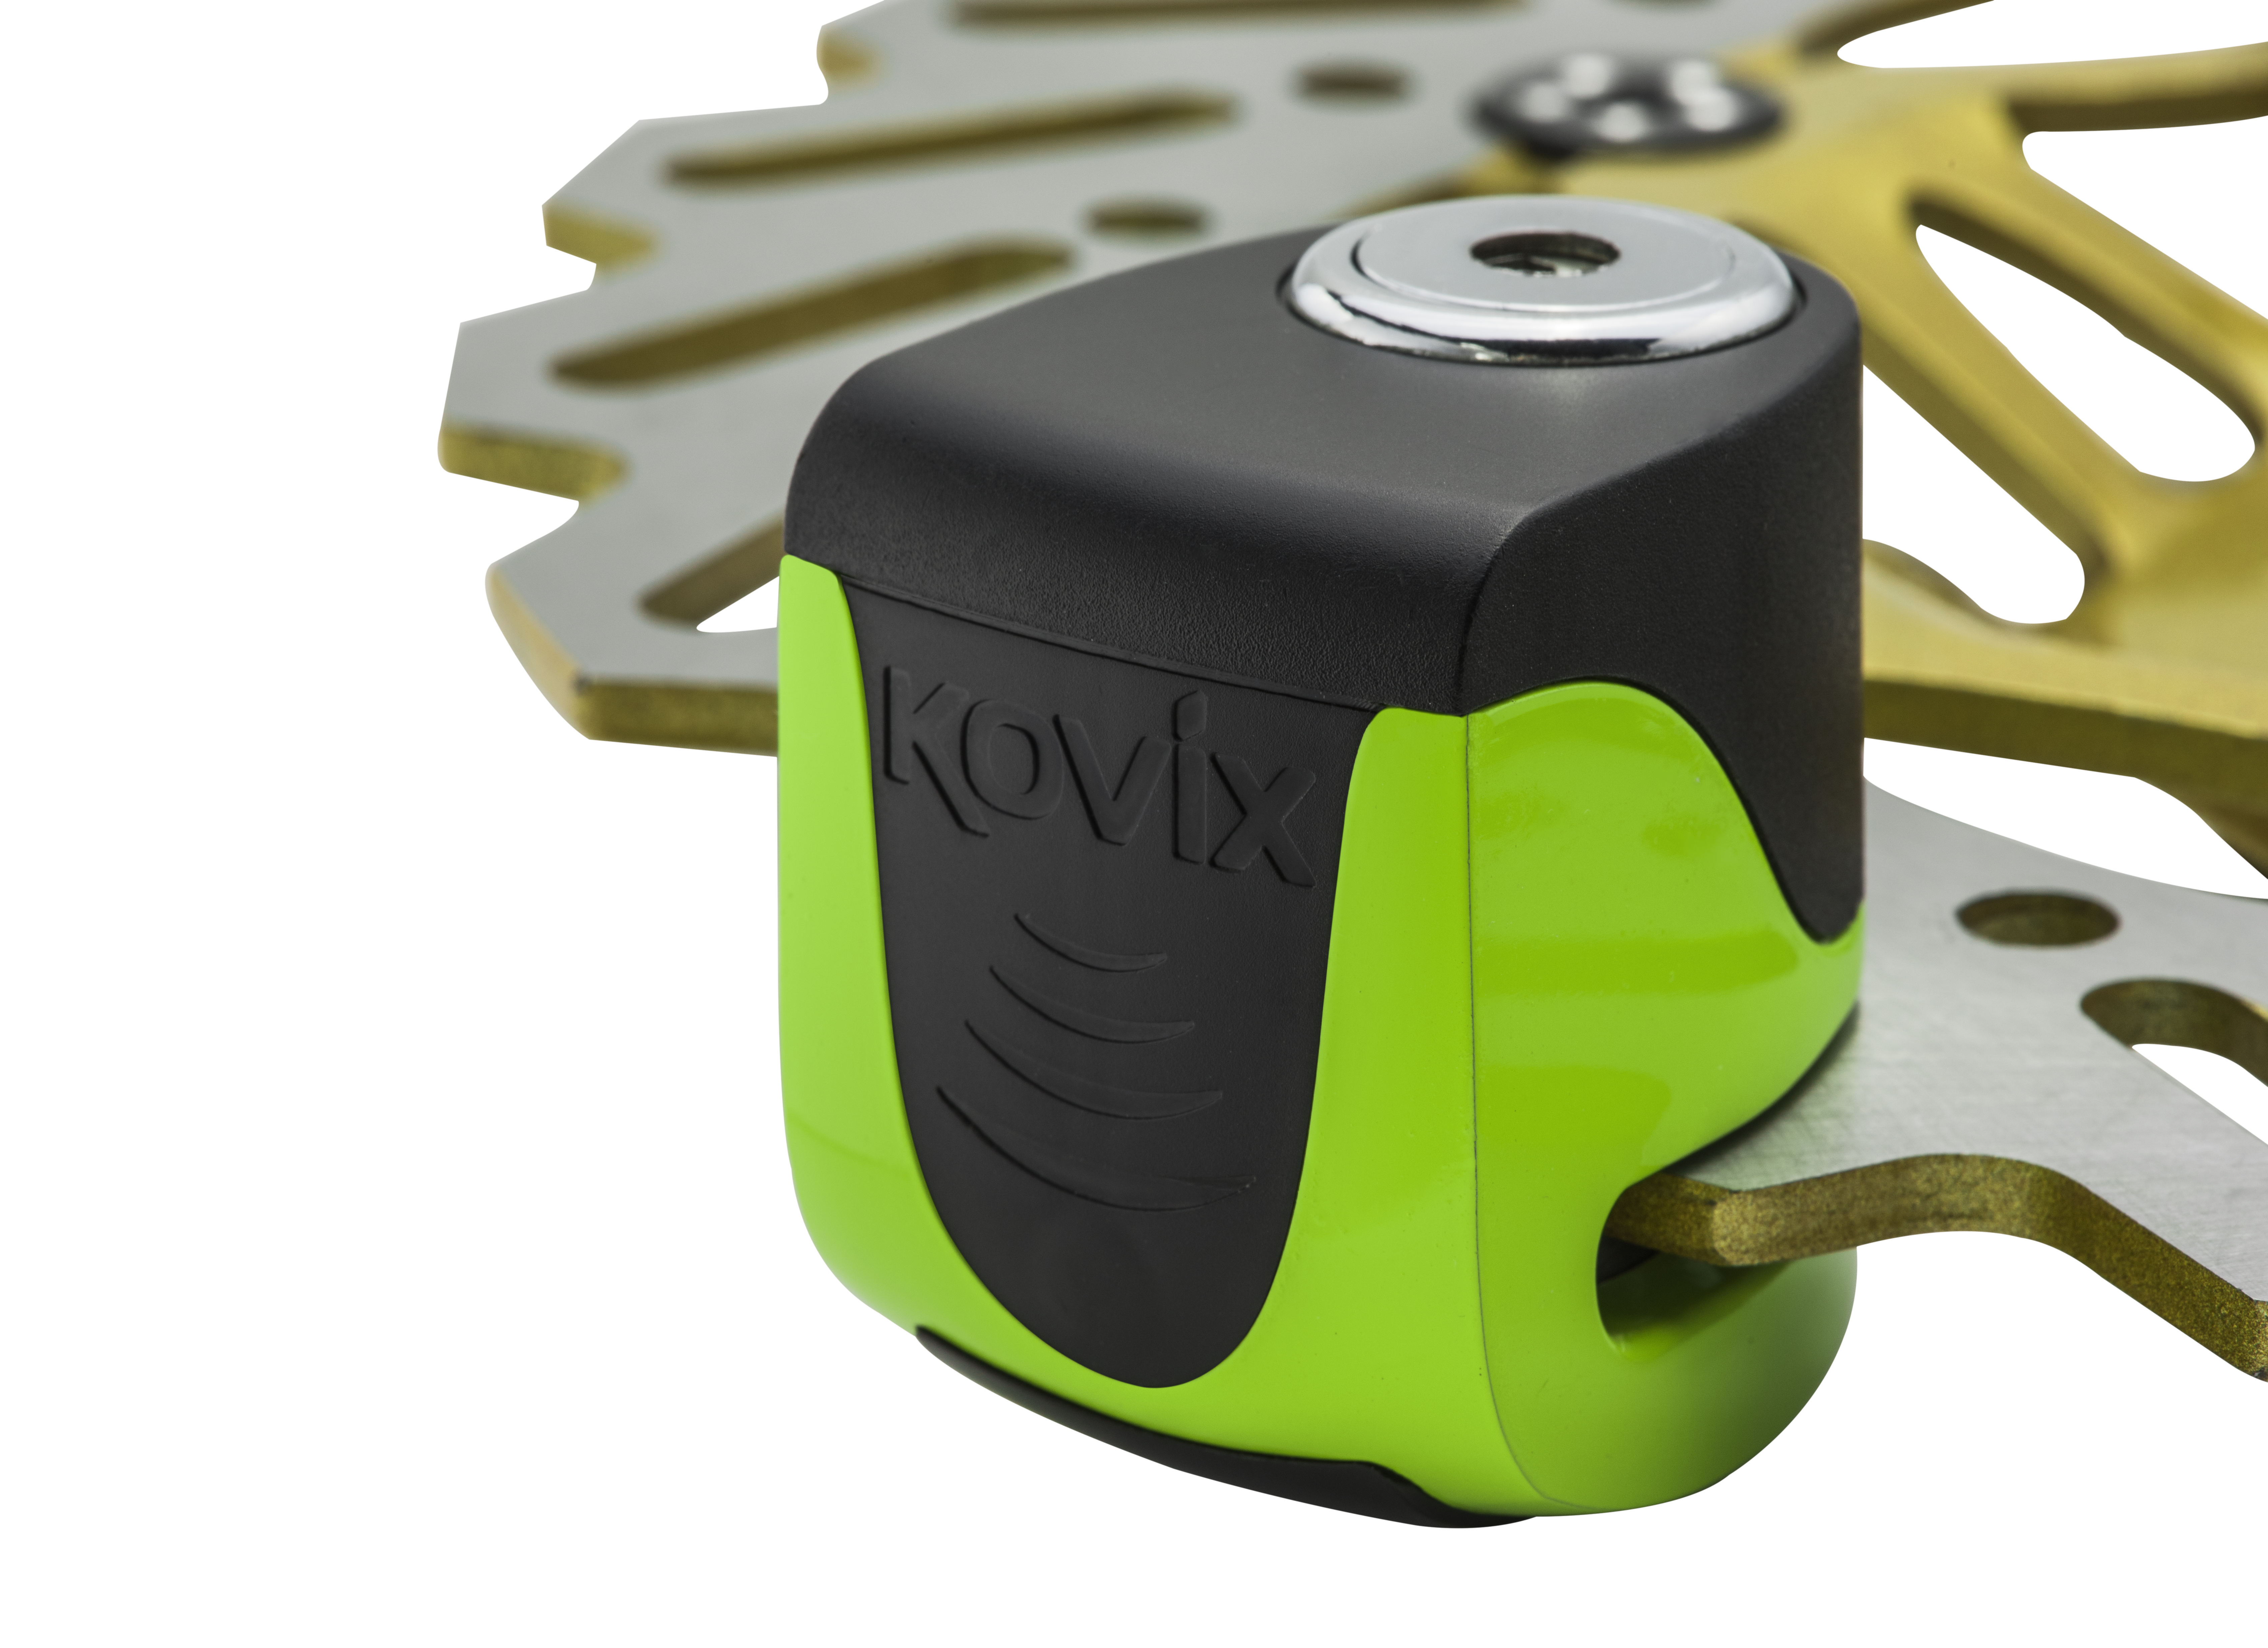 Kovix KD6 Alarm Disc Lock